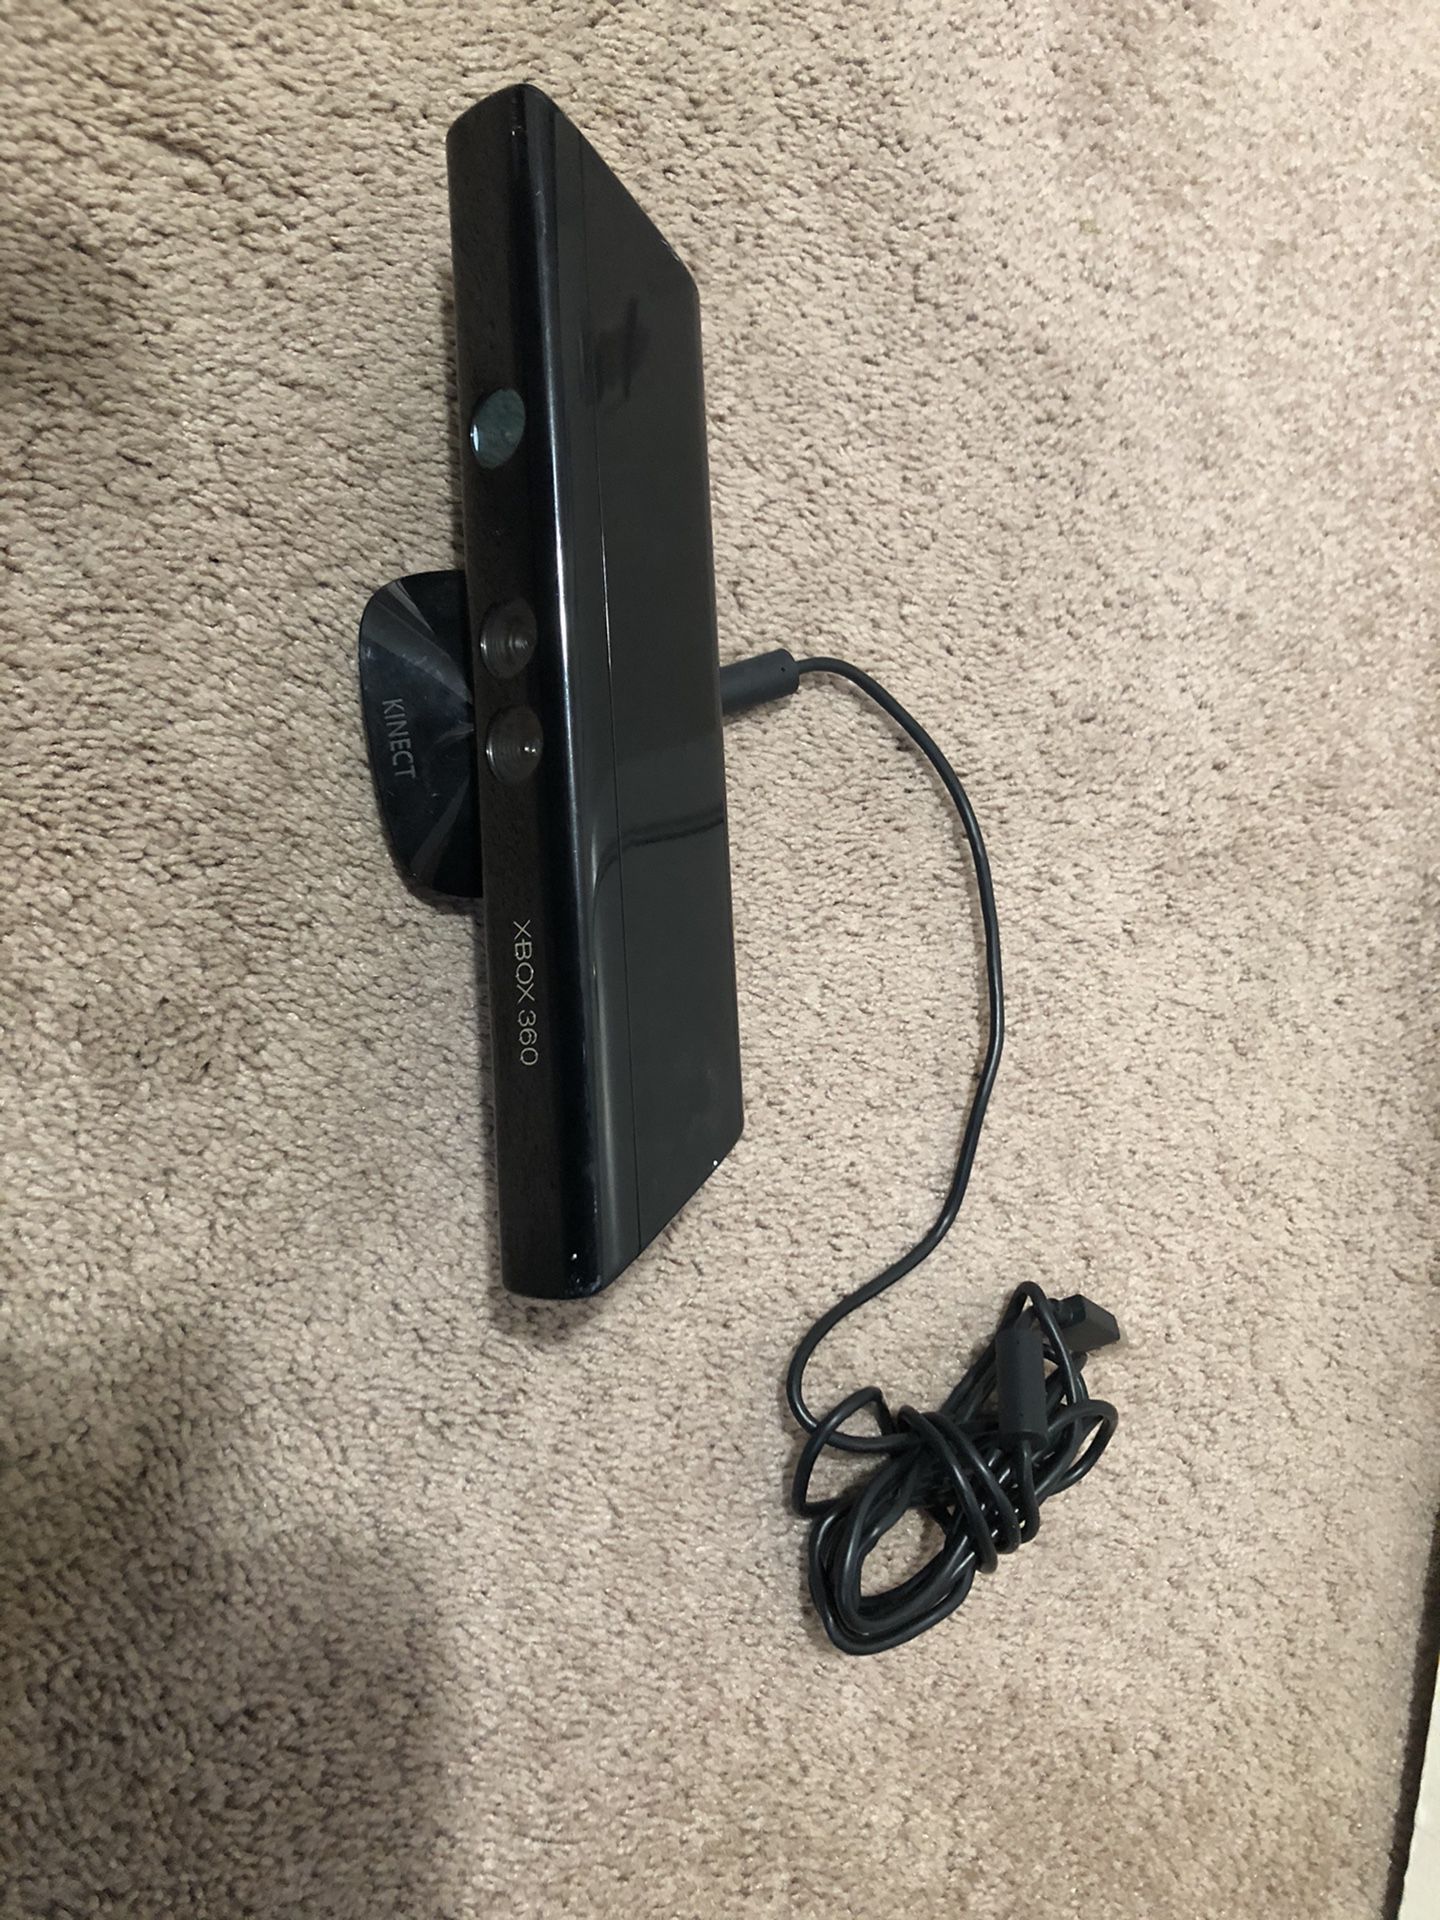 Xbox 360 Kinect Camera/Sensor